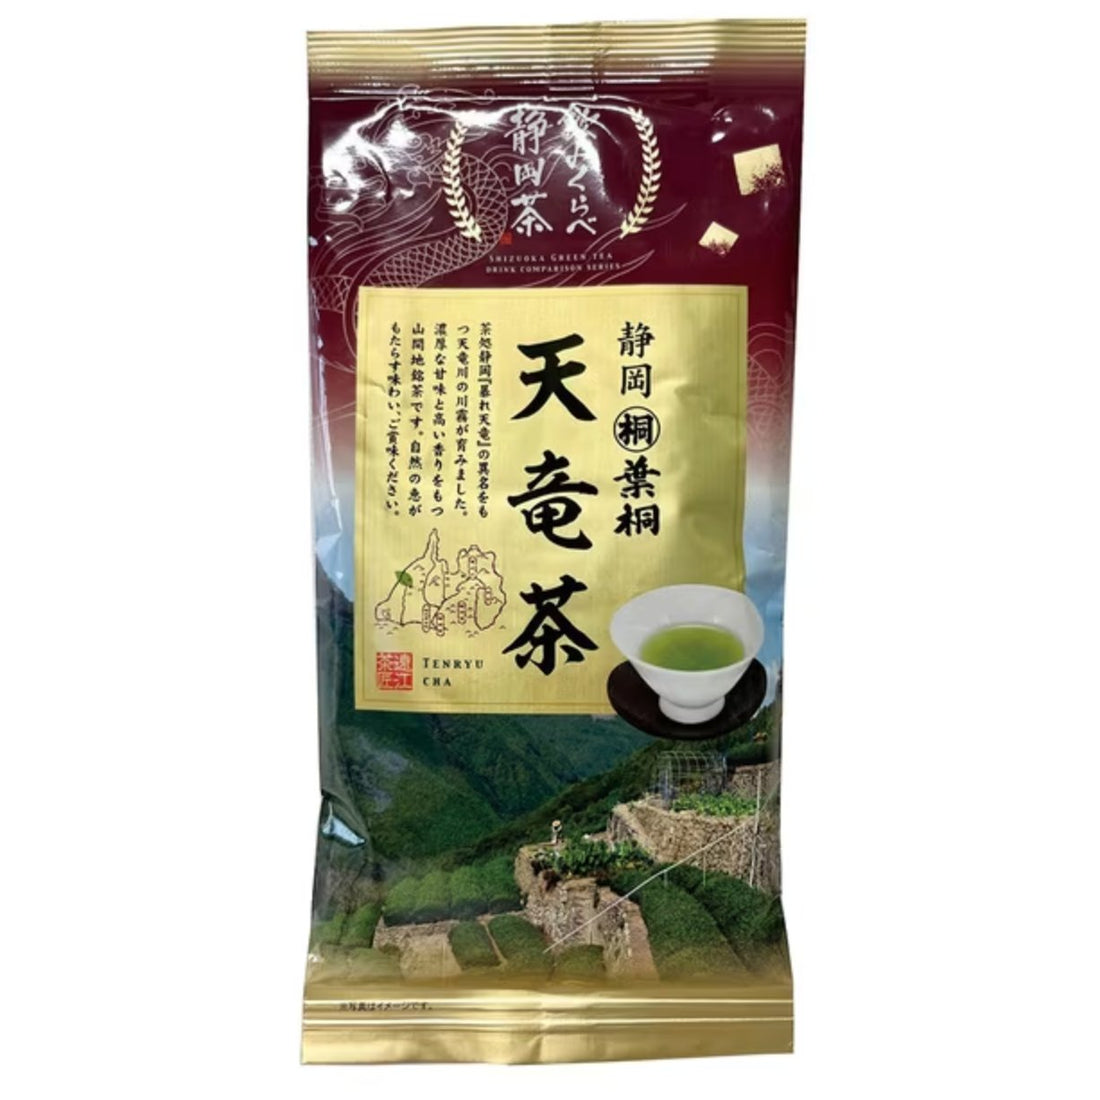 Hagiri Tenryu tea from Shizuoka 100g - NihonMura